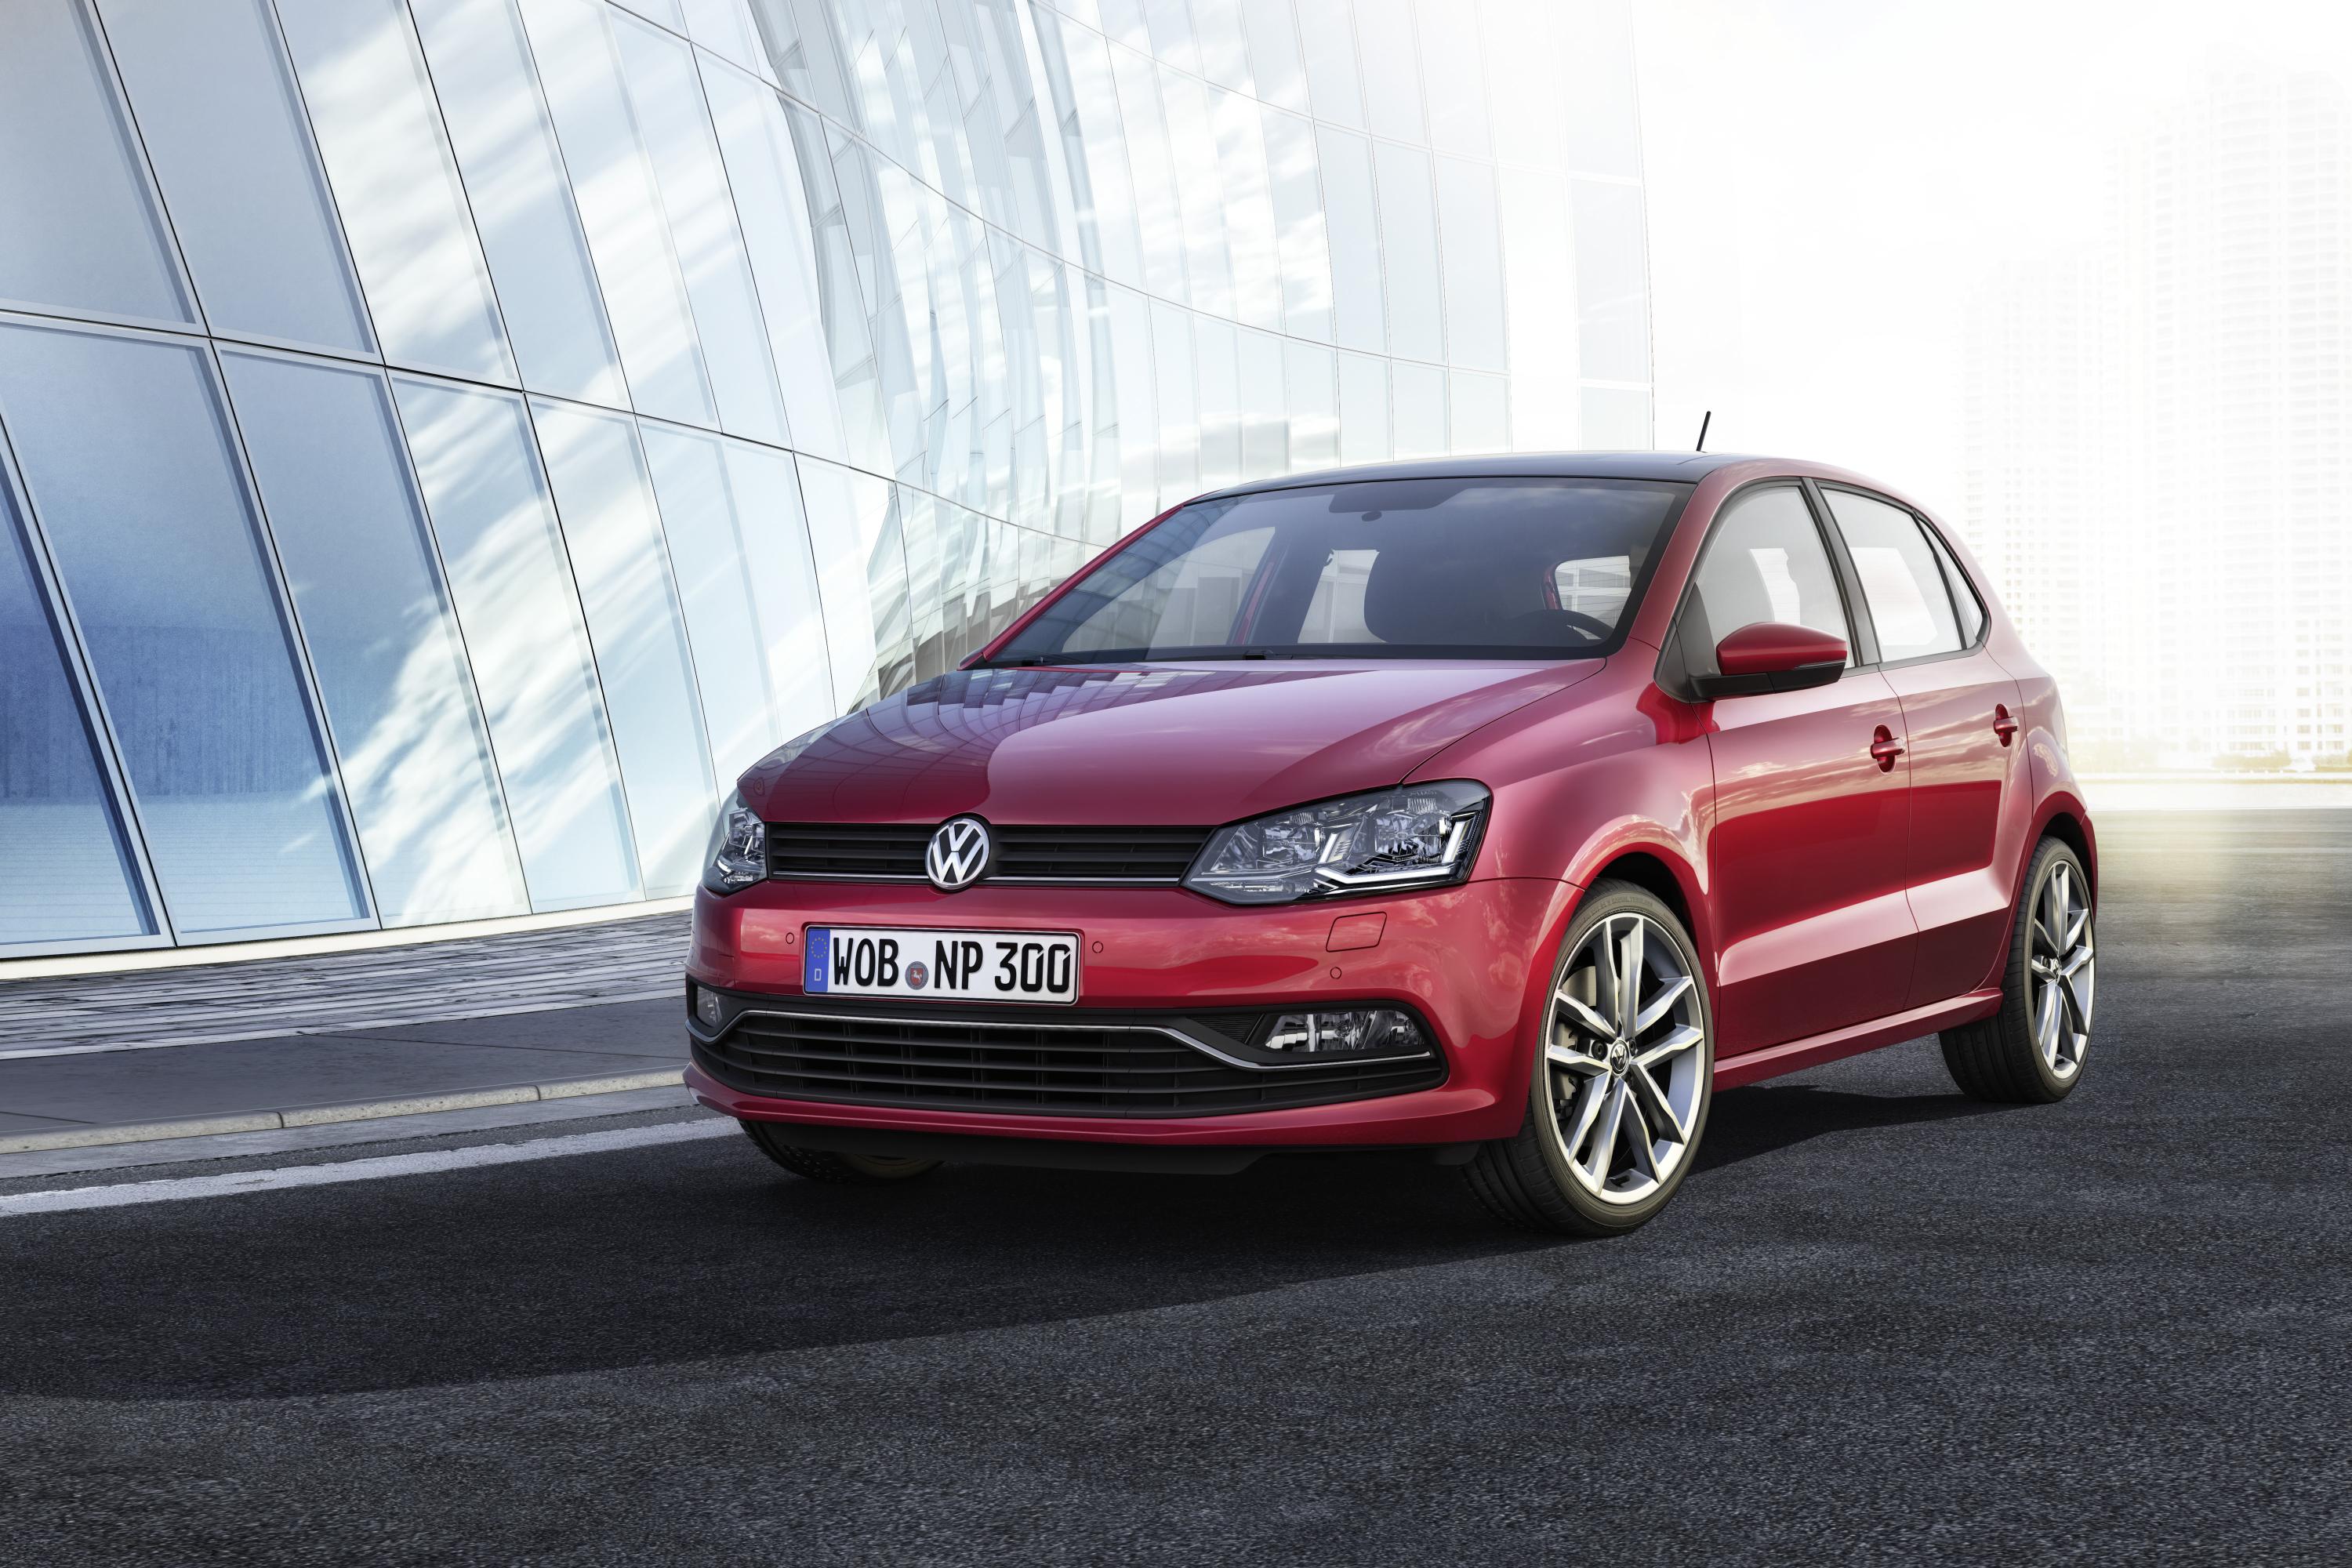 New 2014 Volkswagen Polo facelift